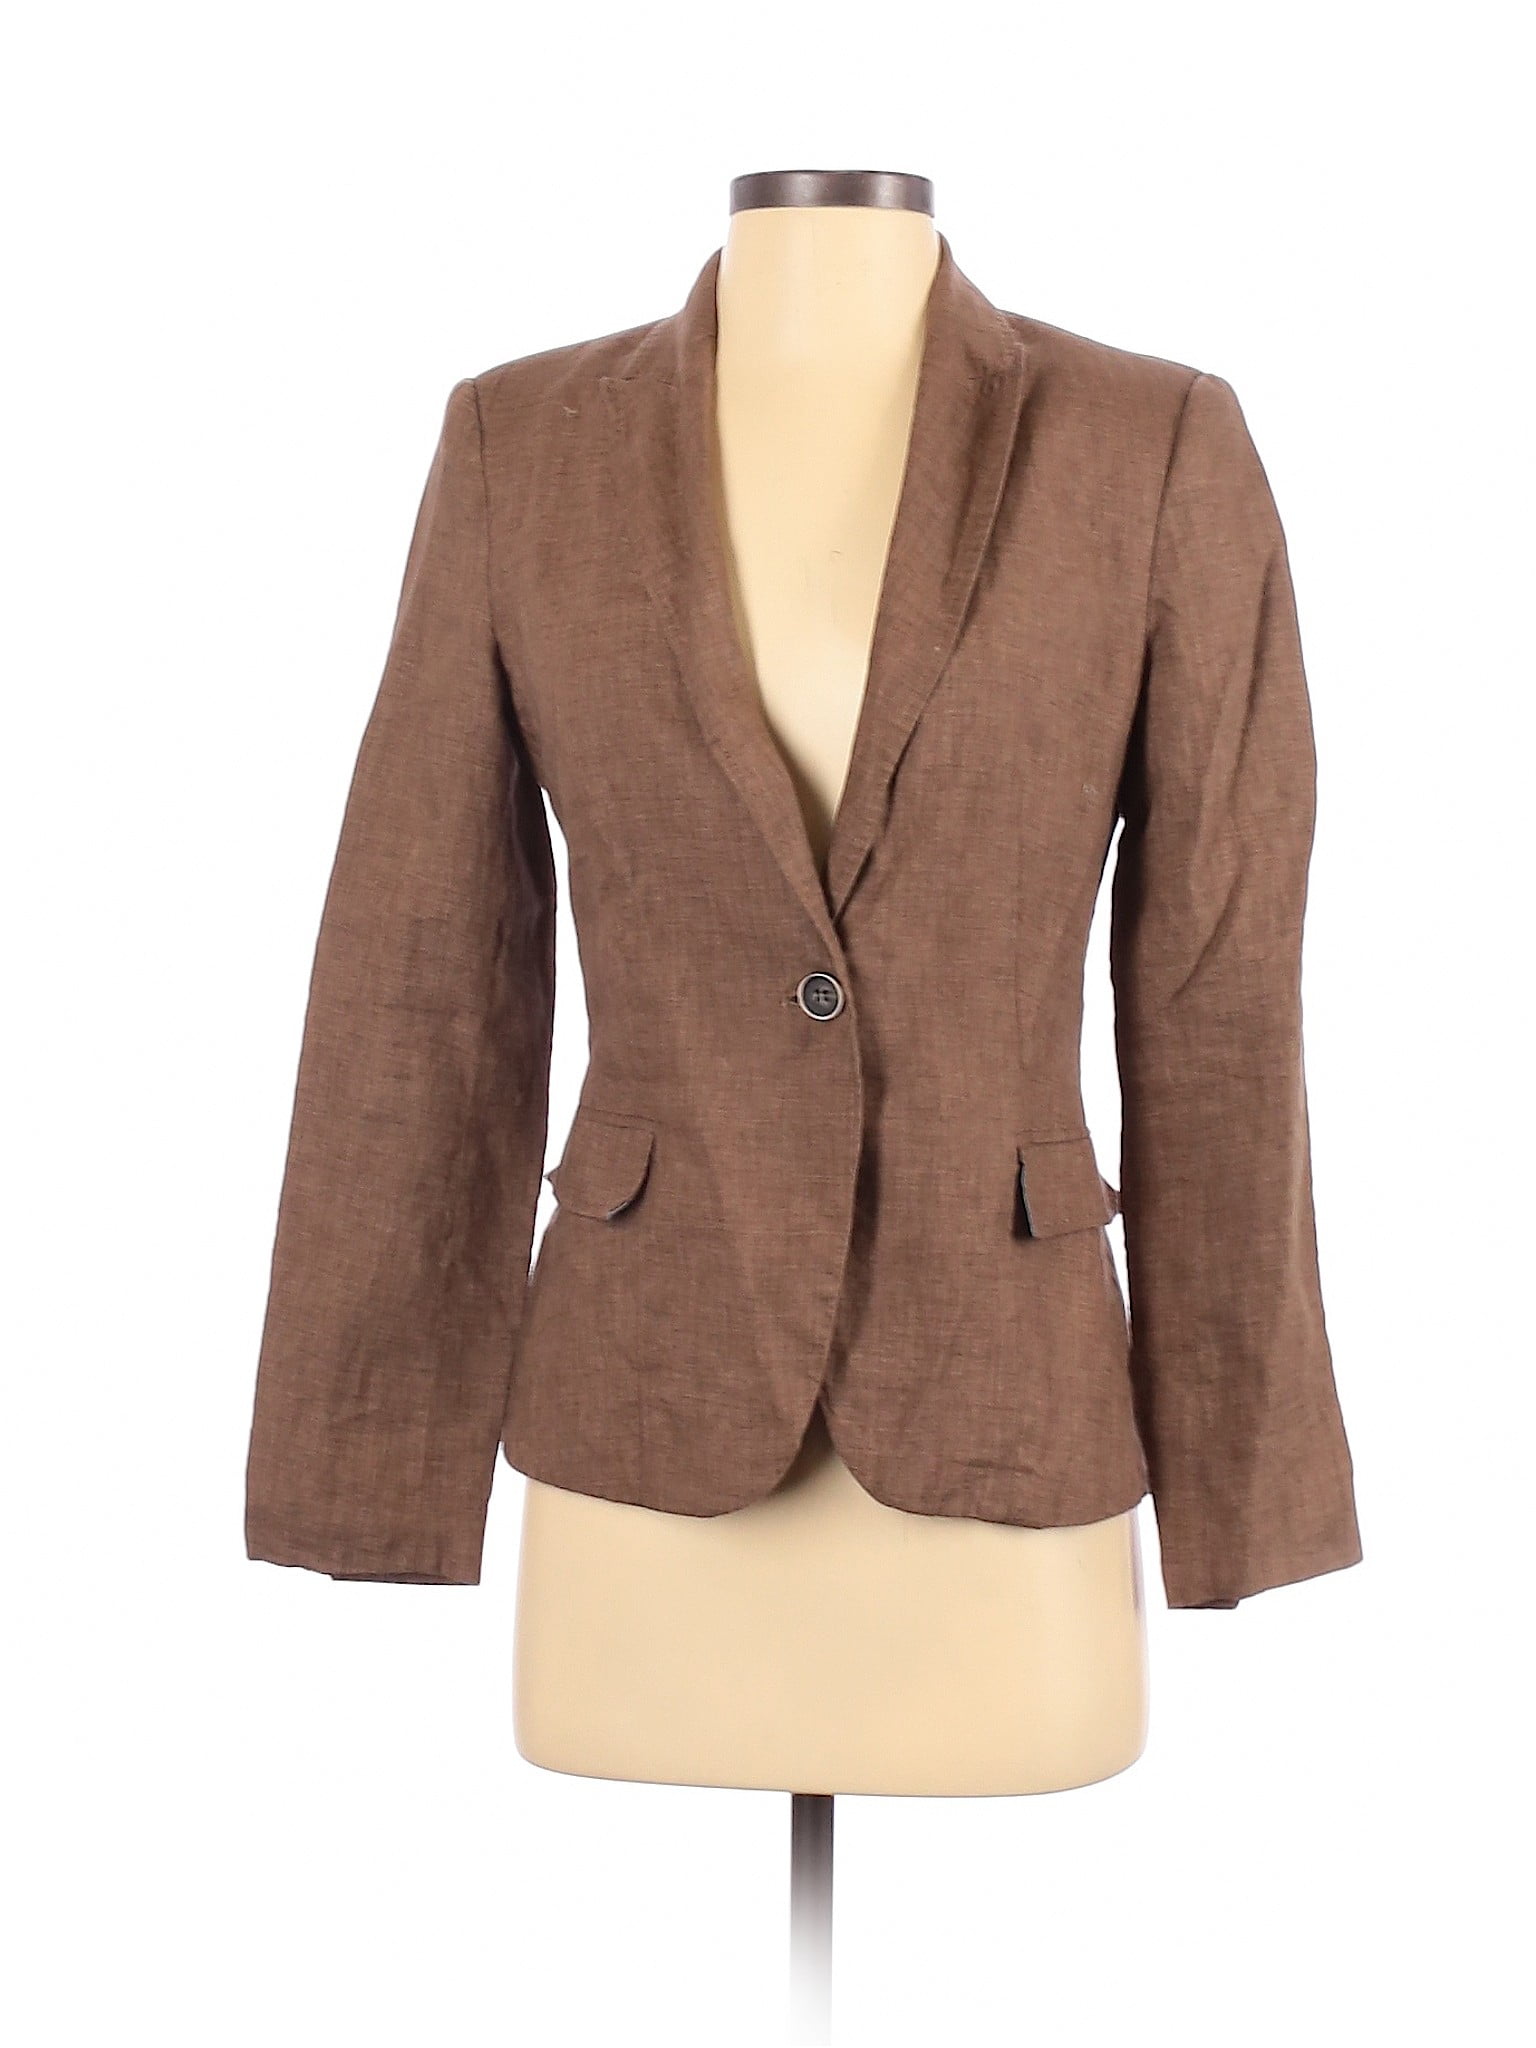 zara brown jacket women's